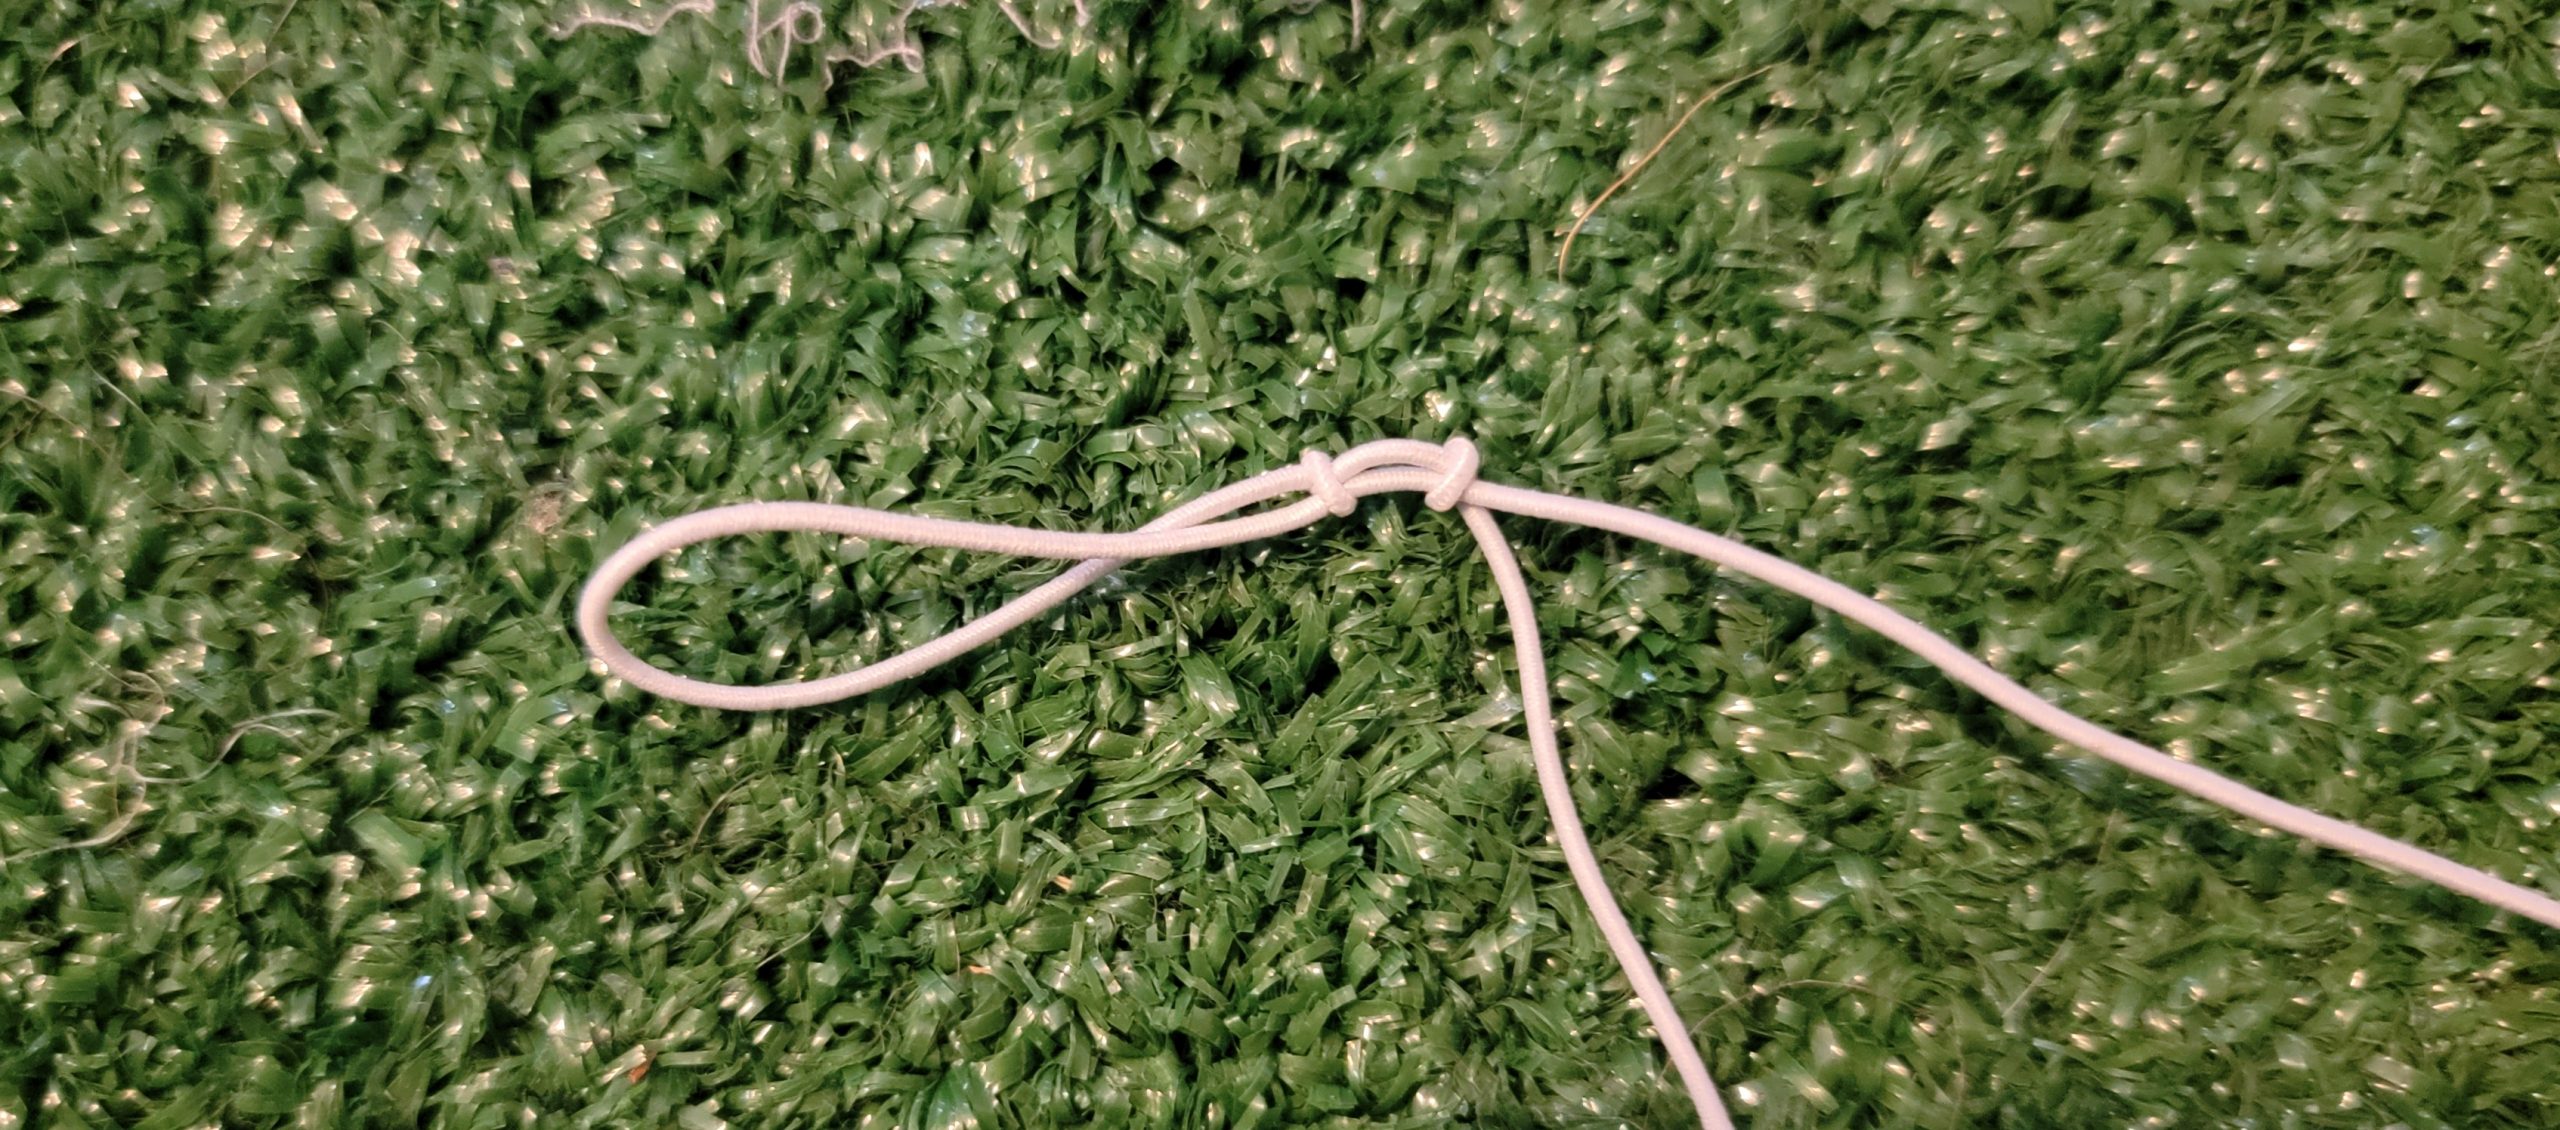 Old Duffer Golf image of an elastic line loop for golf setup